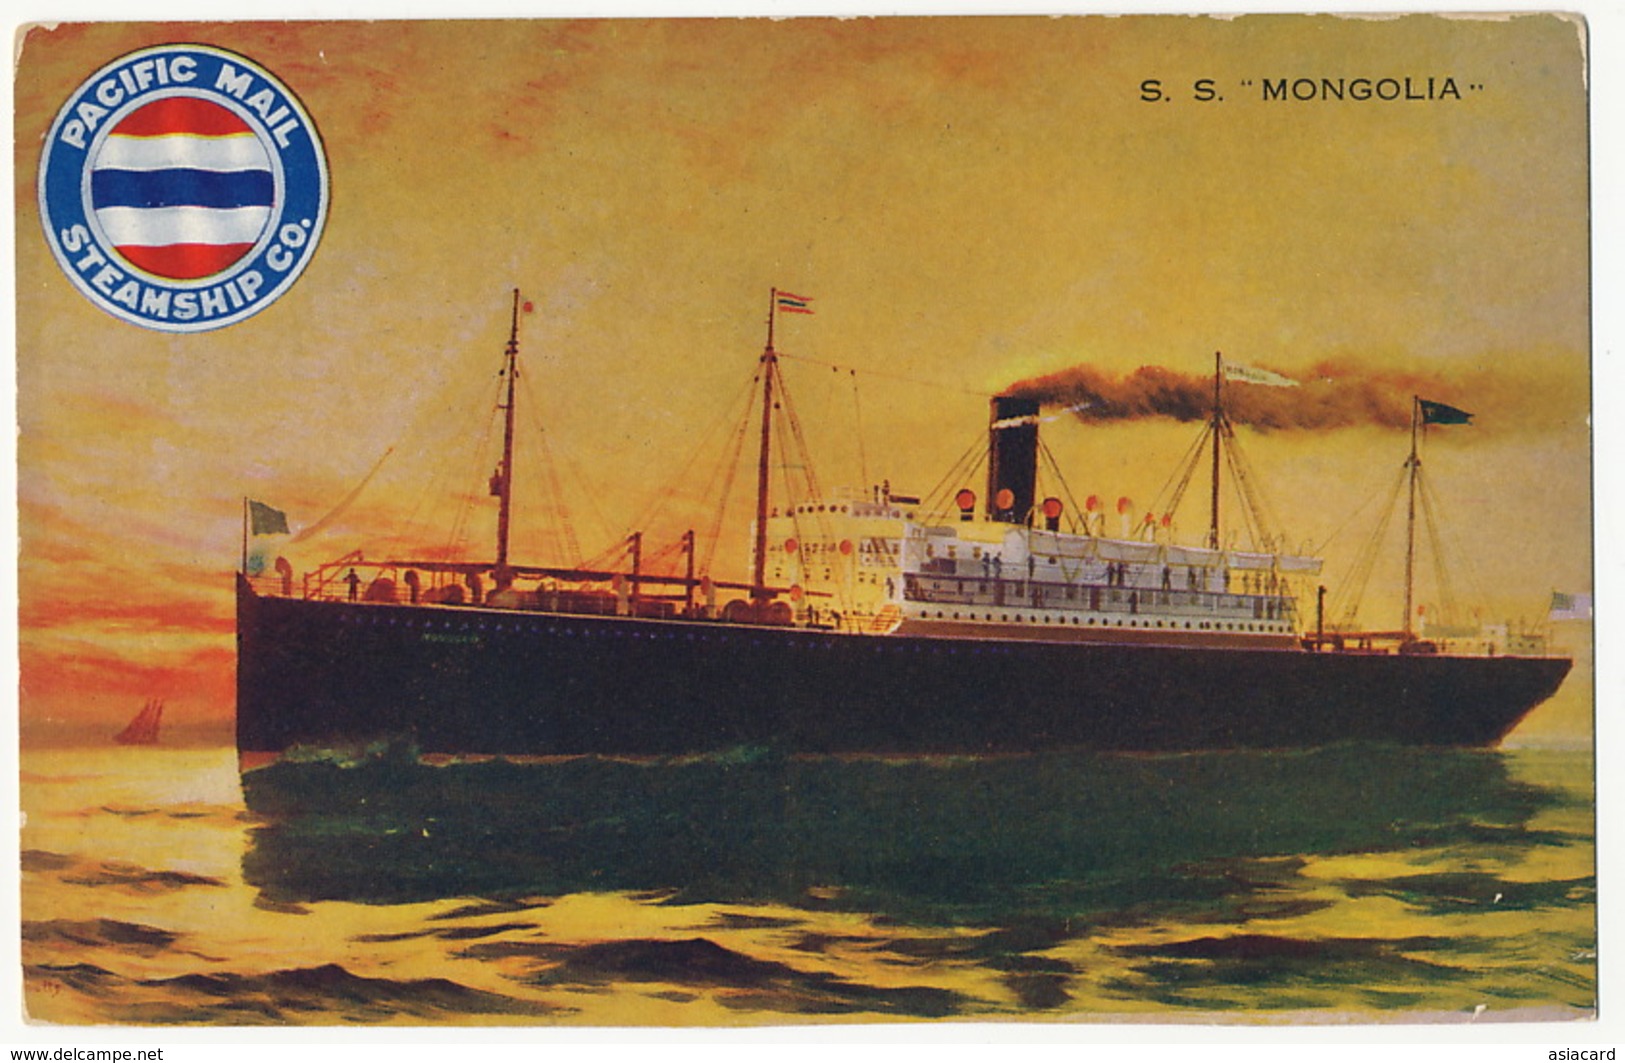 S.S. " Mongolia " Paquebot Ship Pacific Mail Steamship Co. - Mongolia